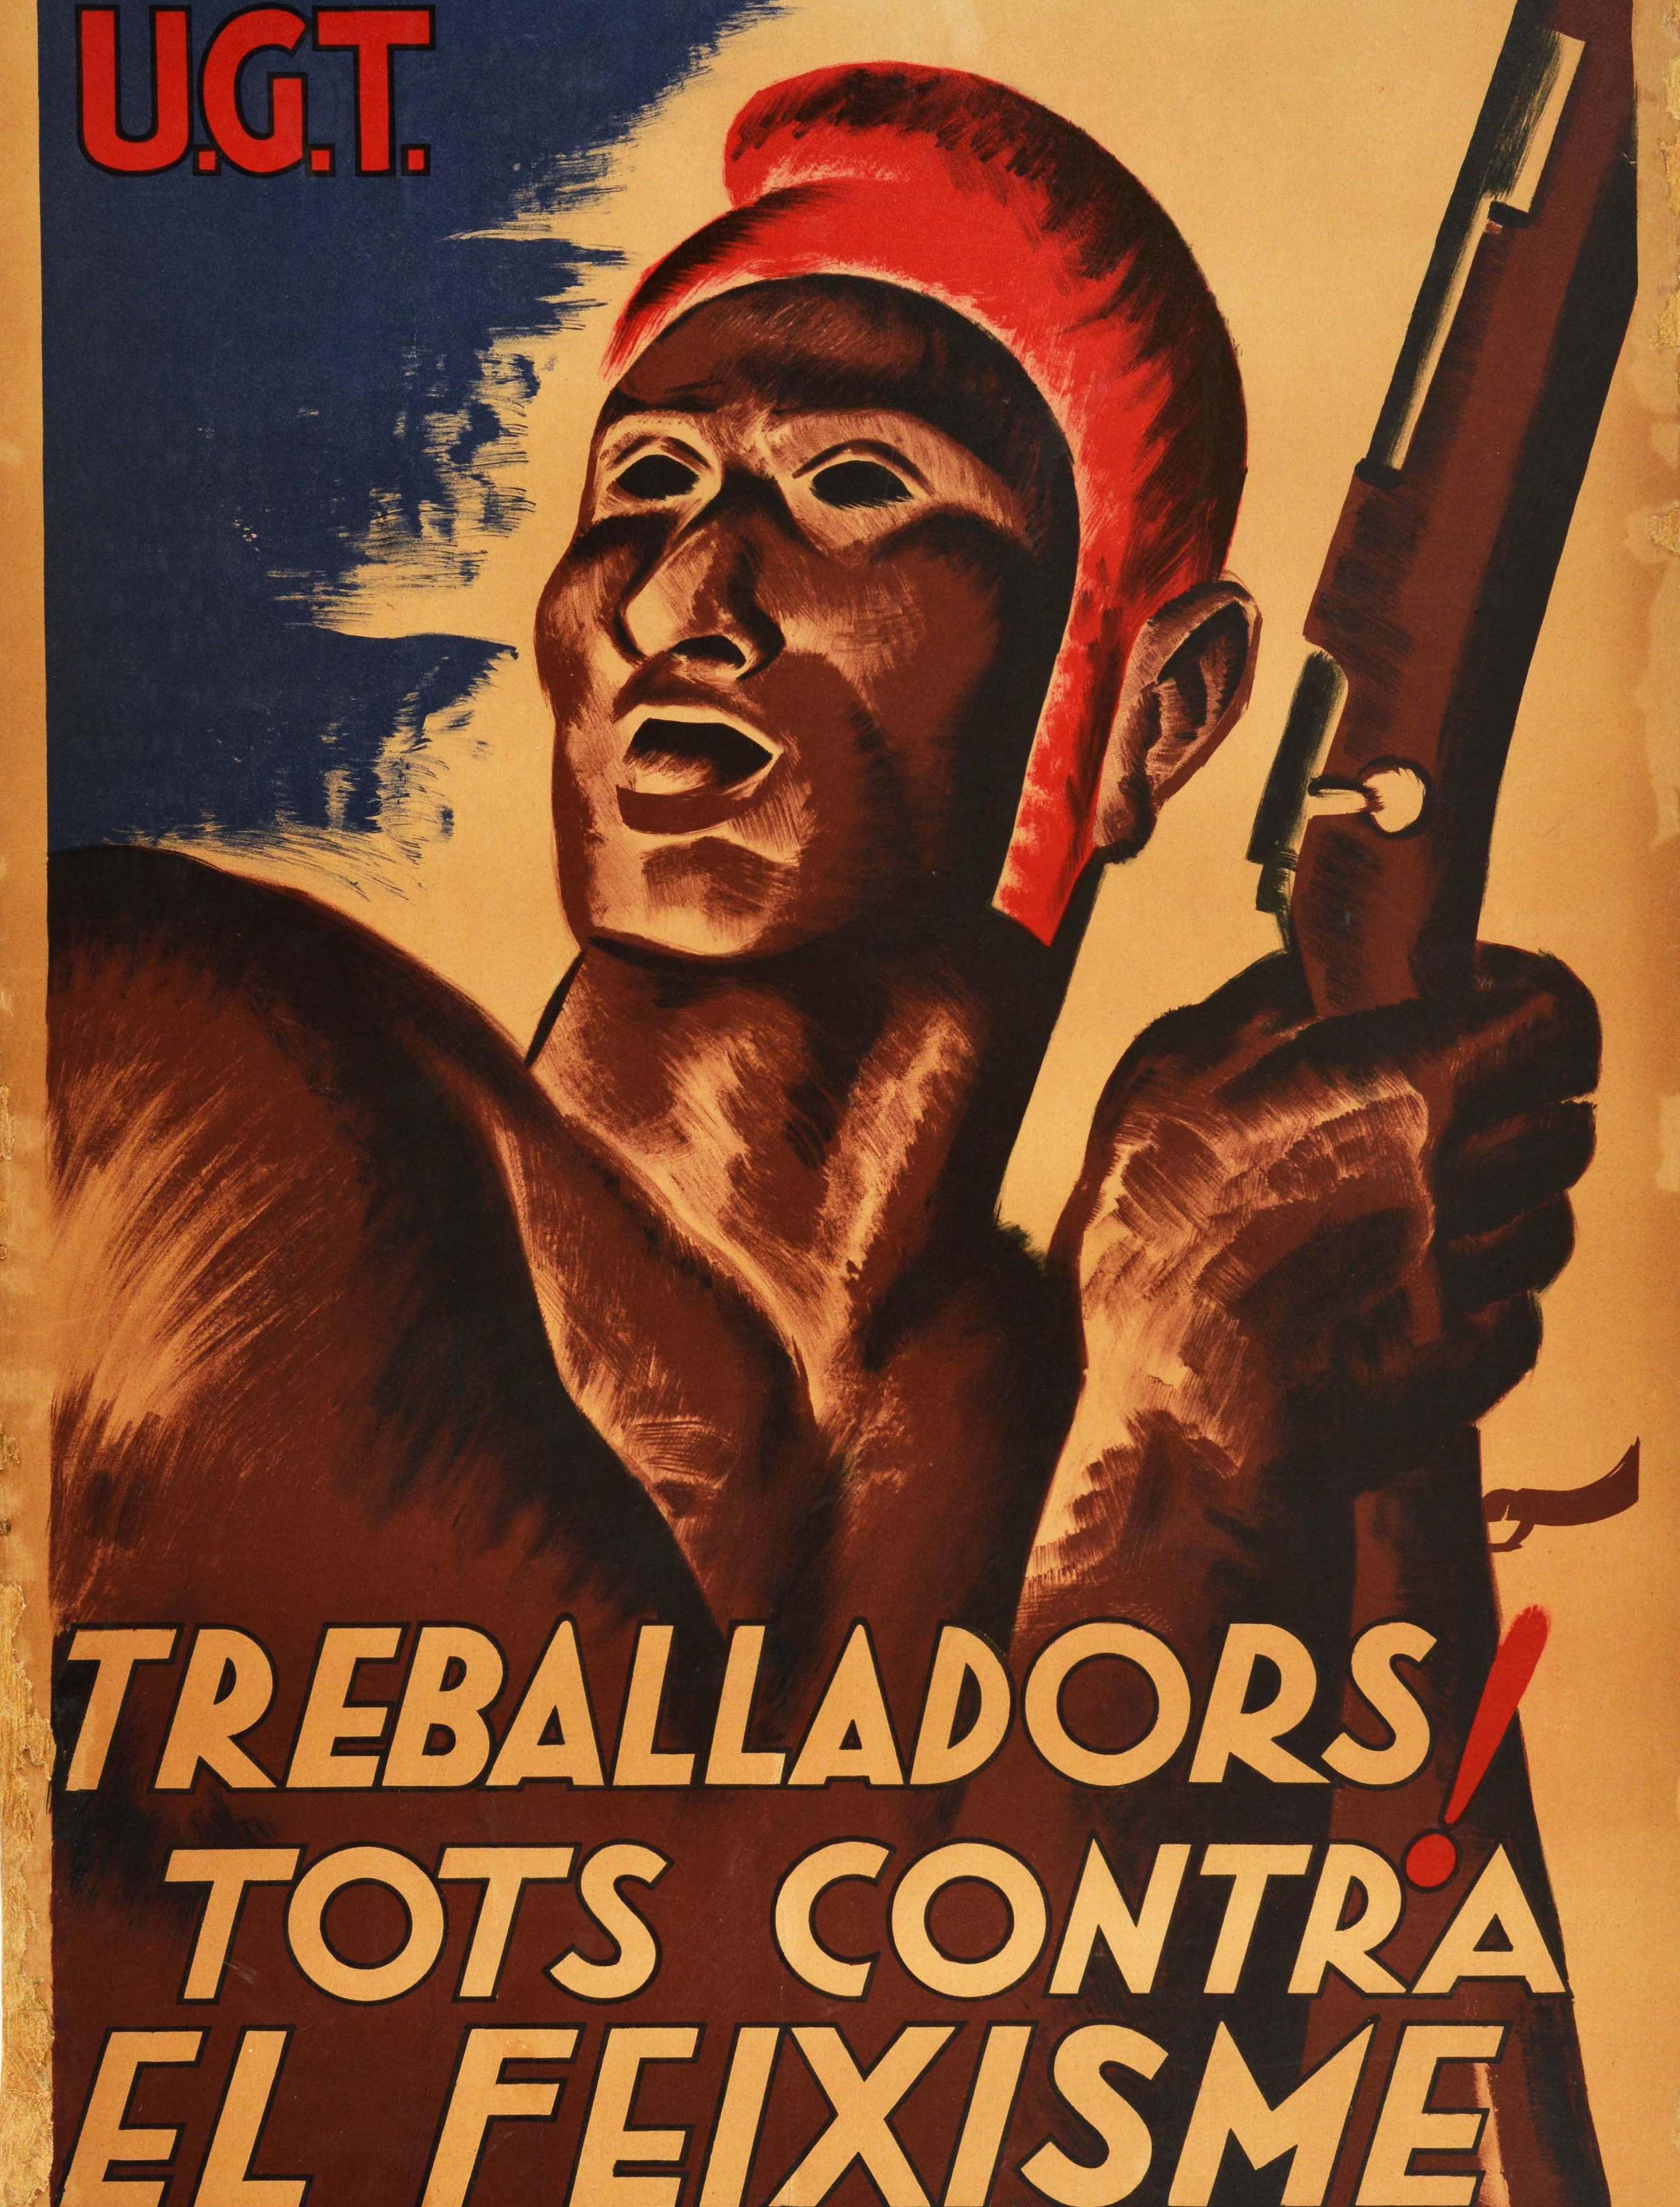 fascism poster